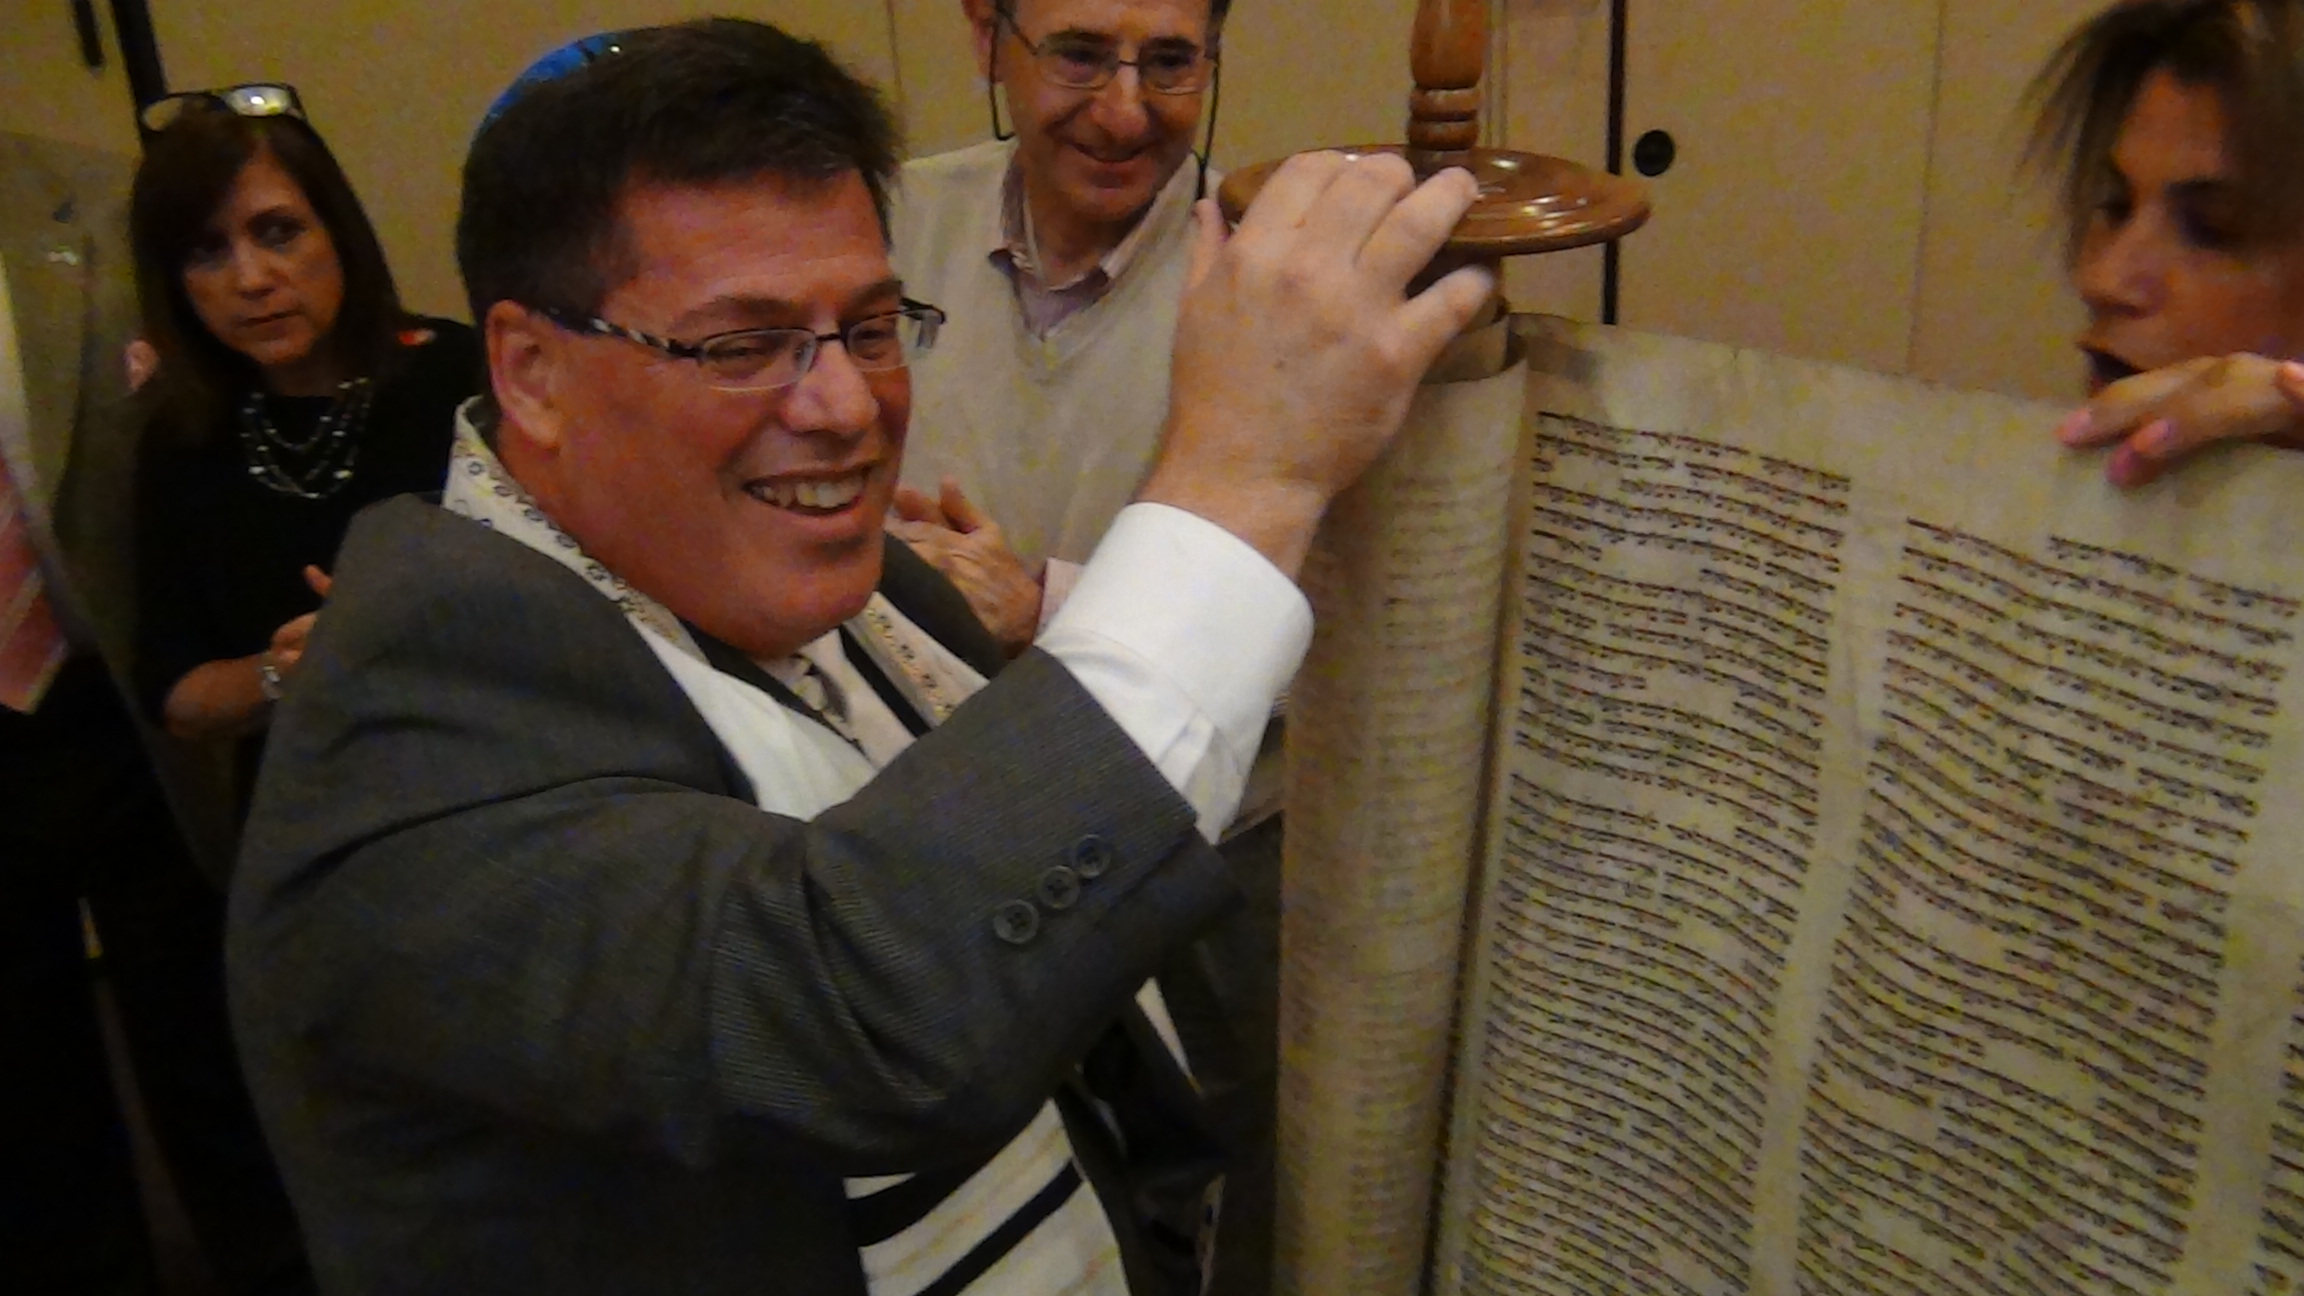 Cantor Neil Schnitzler unrolls a Holocaust surviving Torah scroll at Temple Emanuel